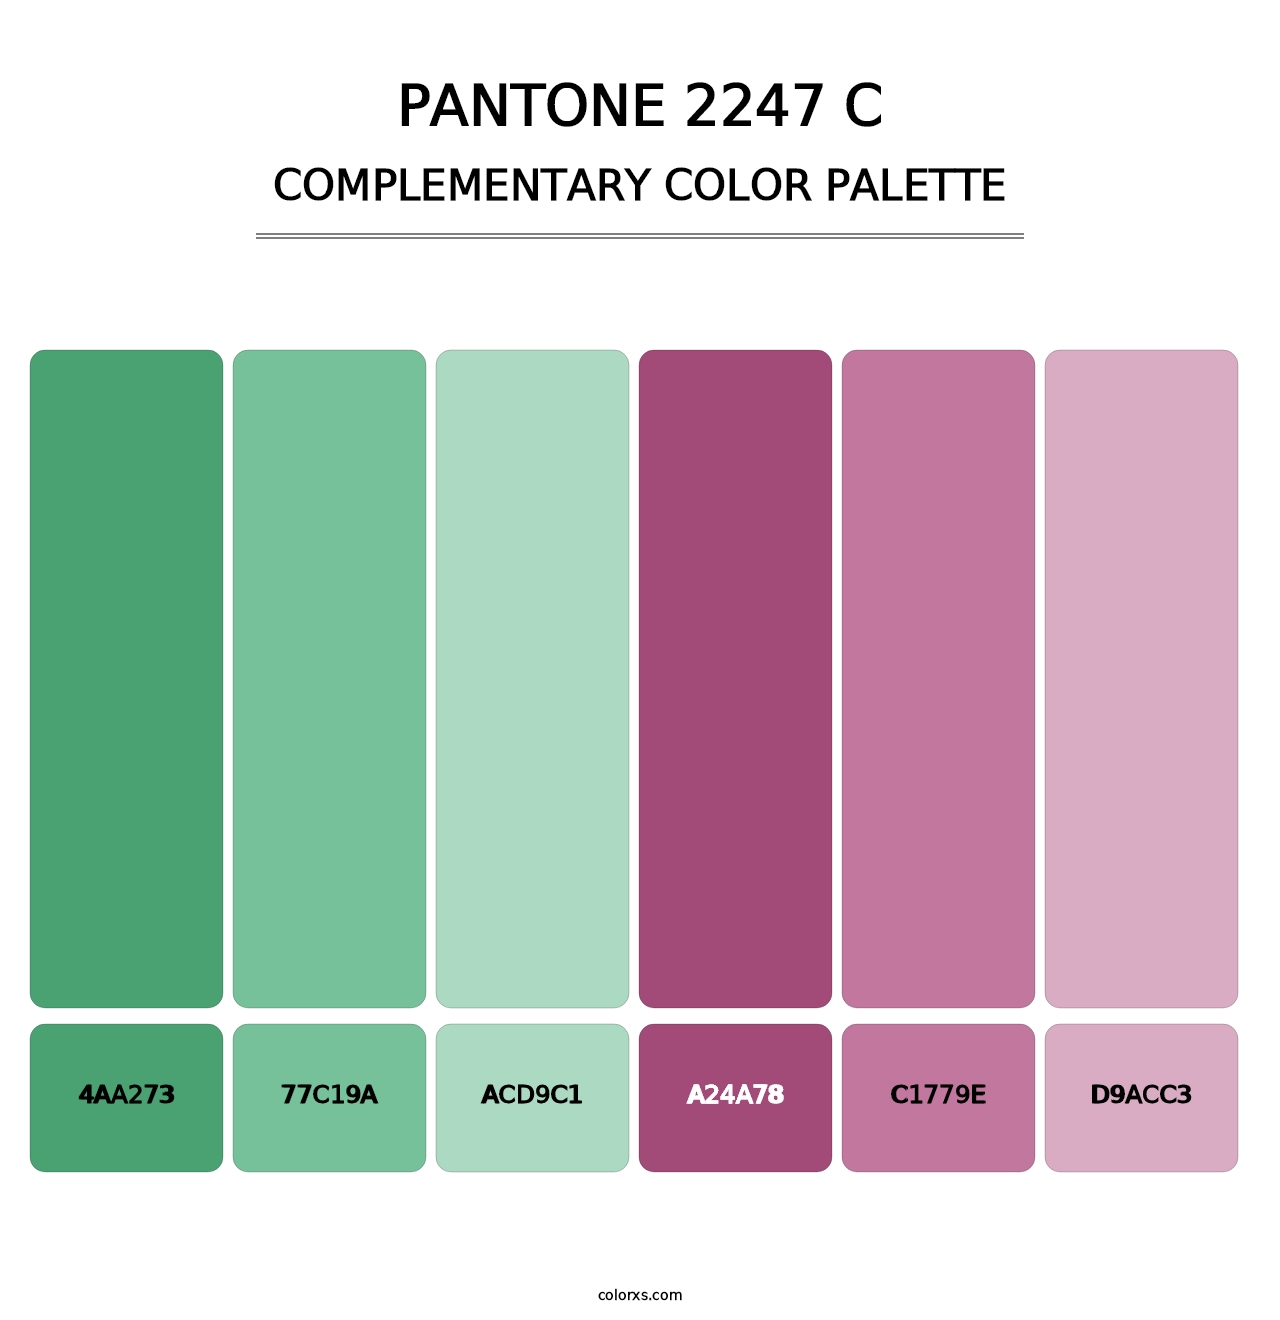 PANTONE 2247 C - Complementary Color Palette